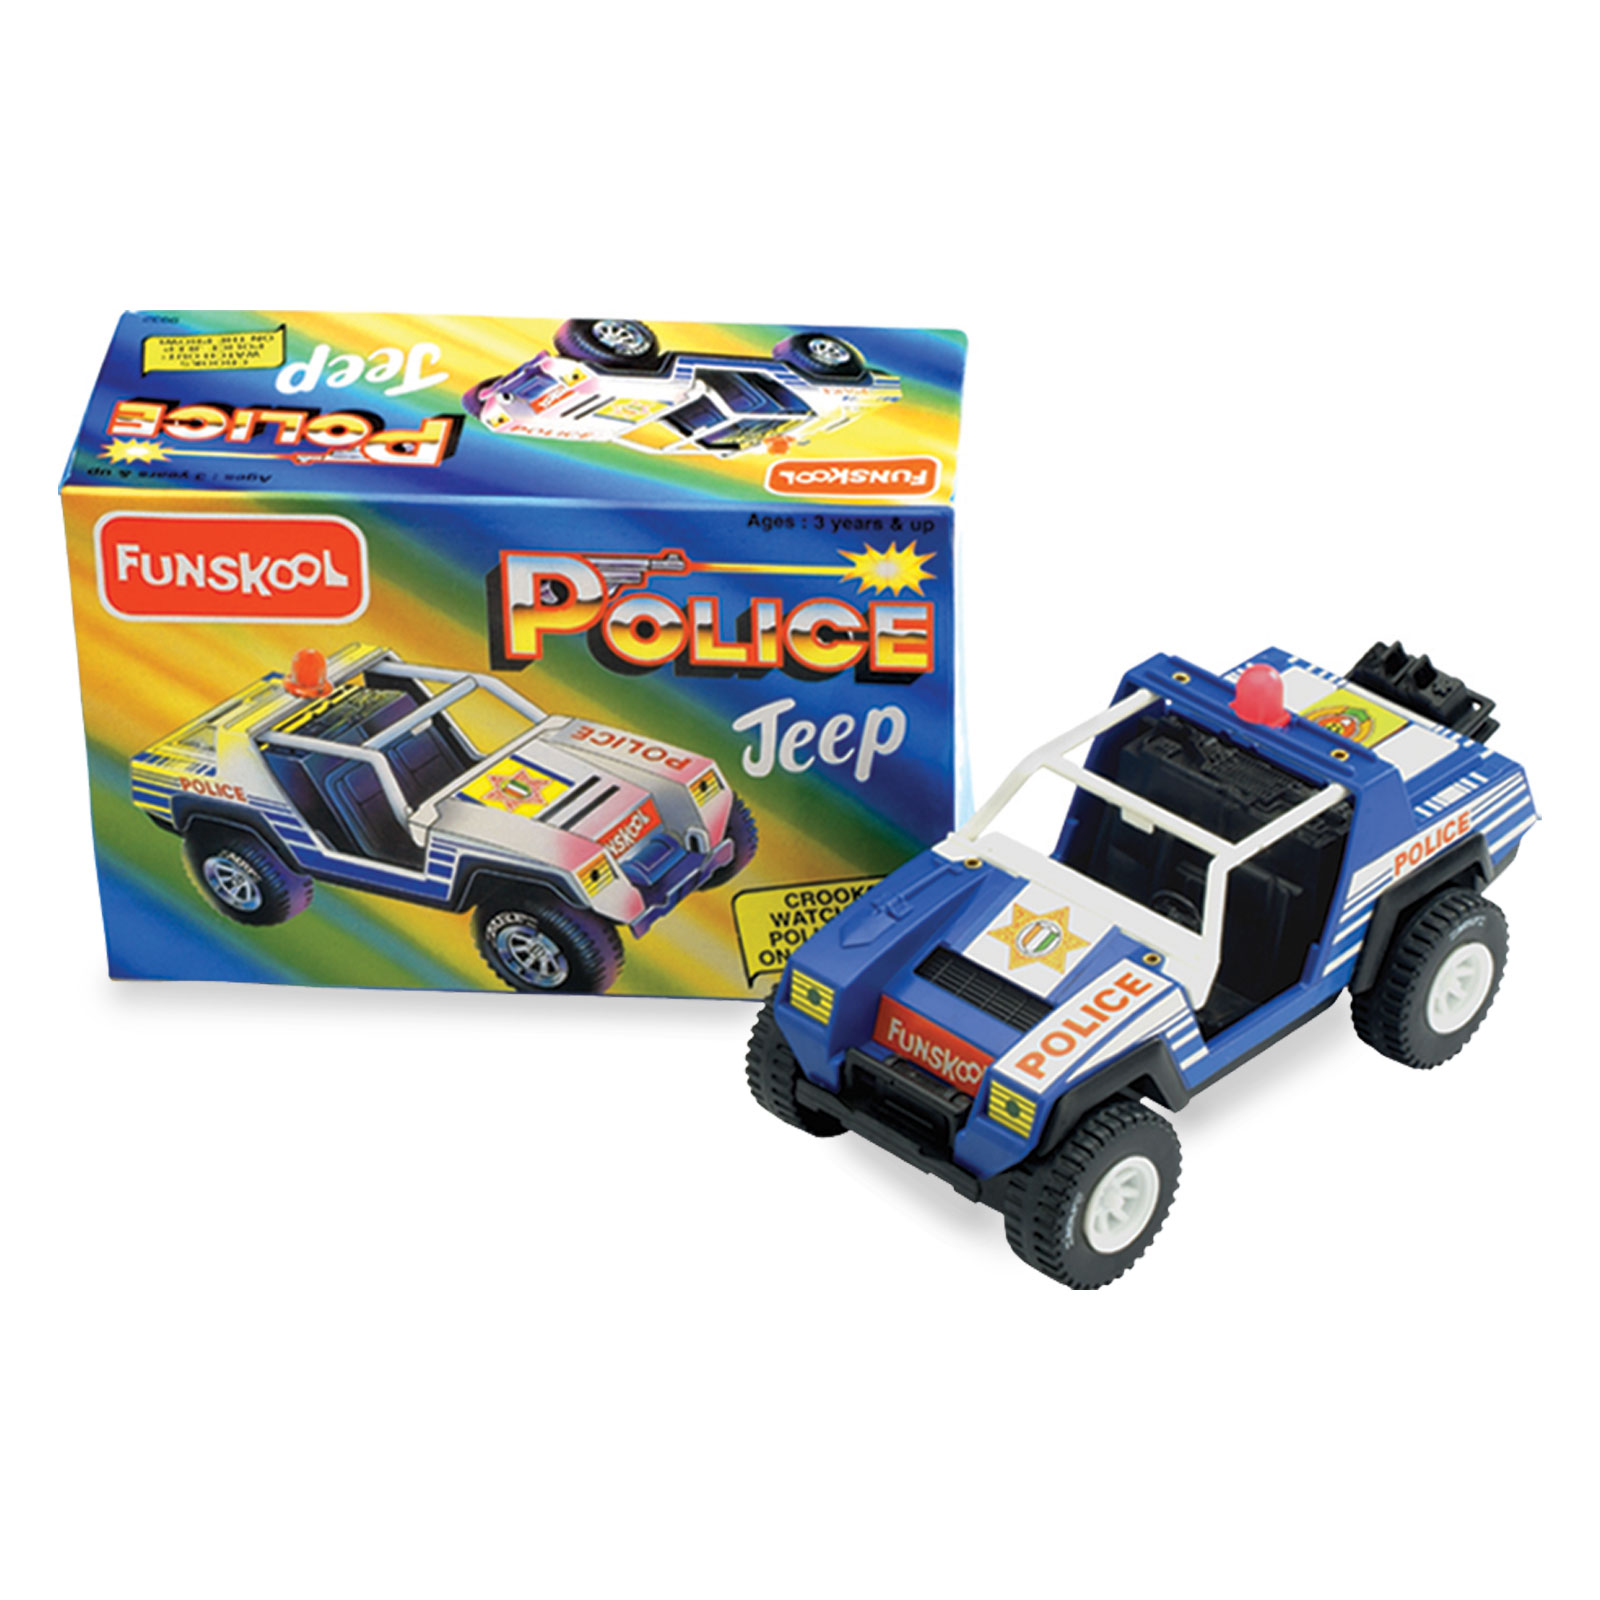 Police Jeep